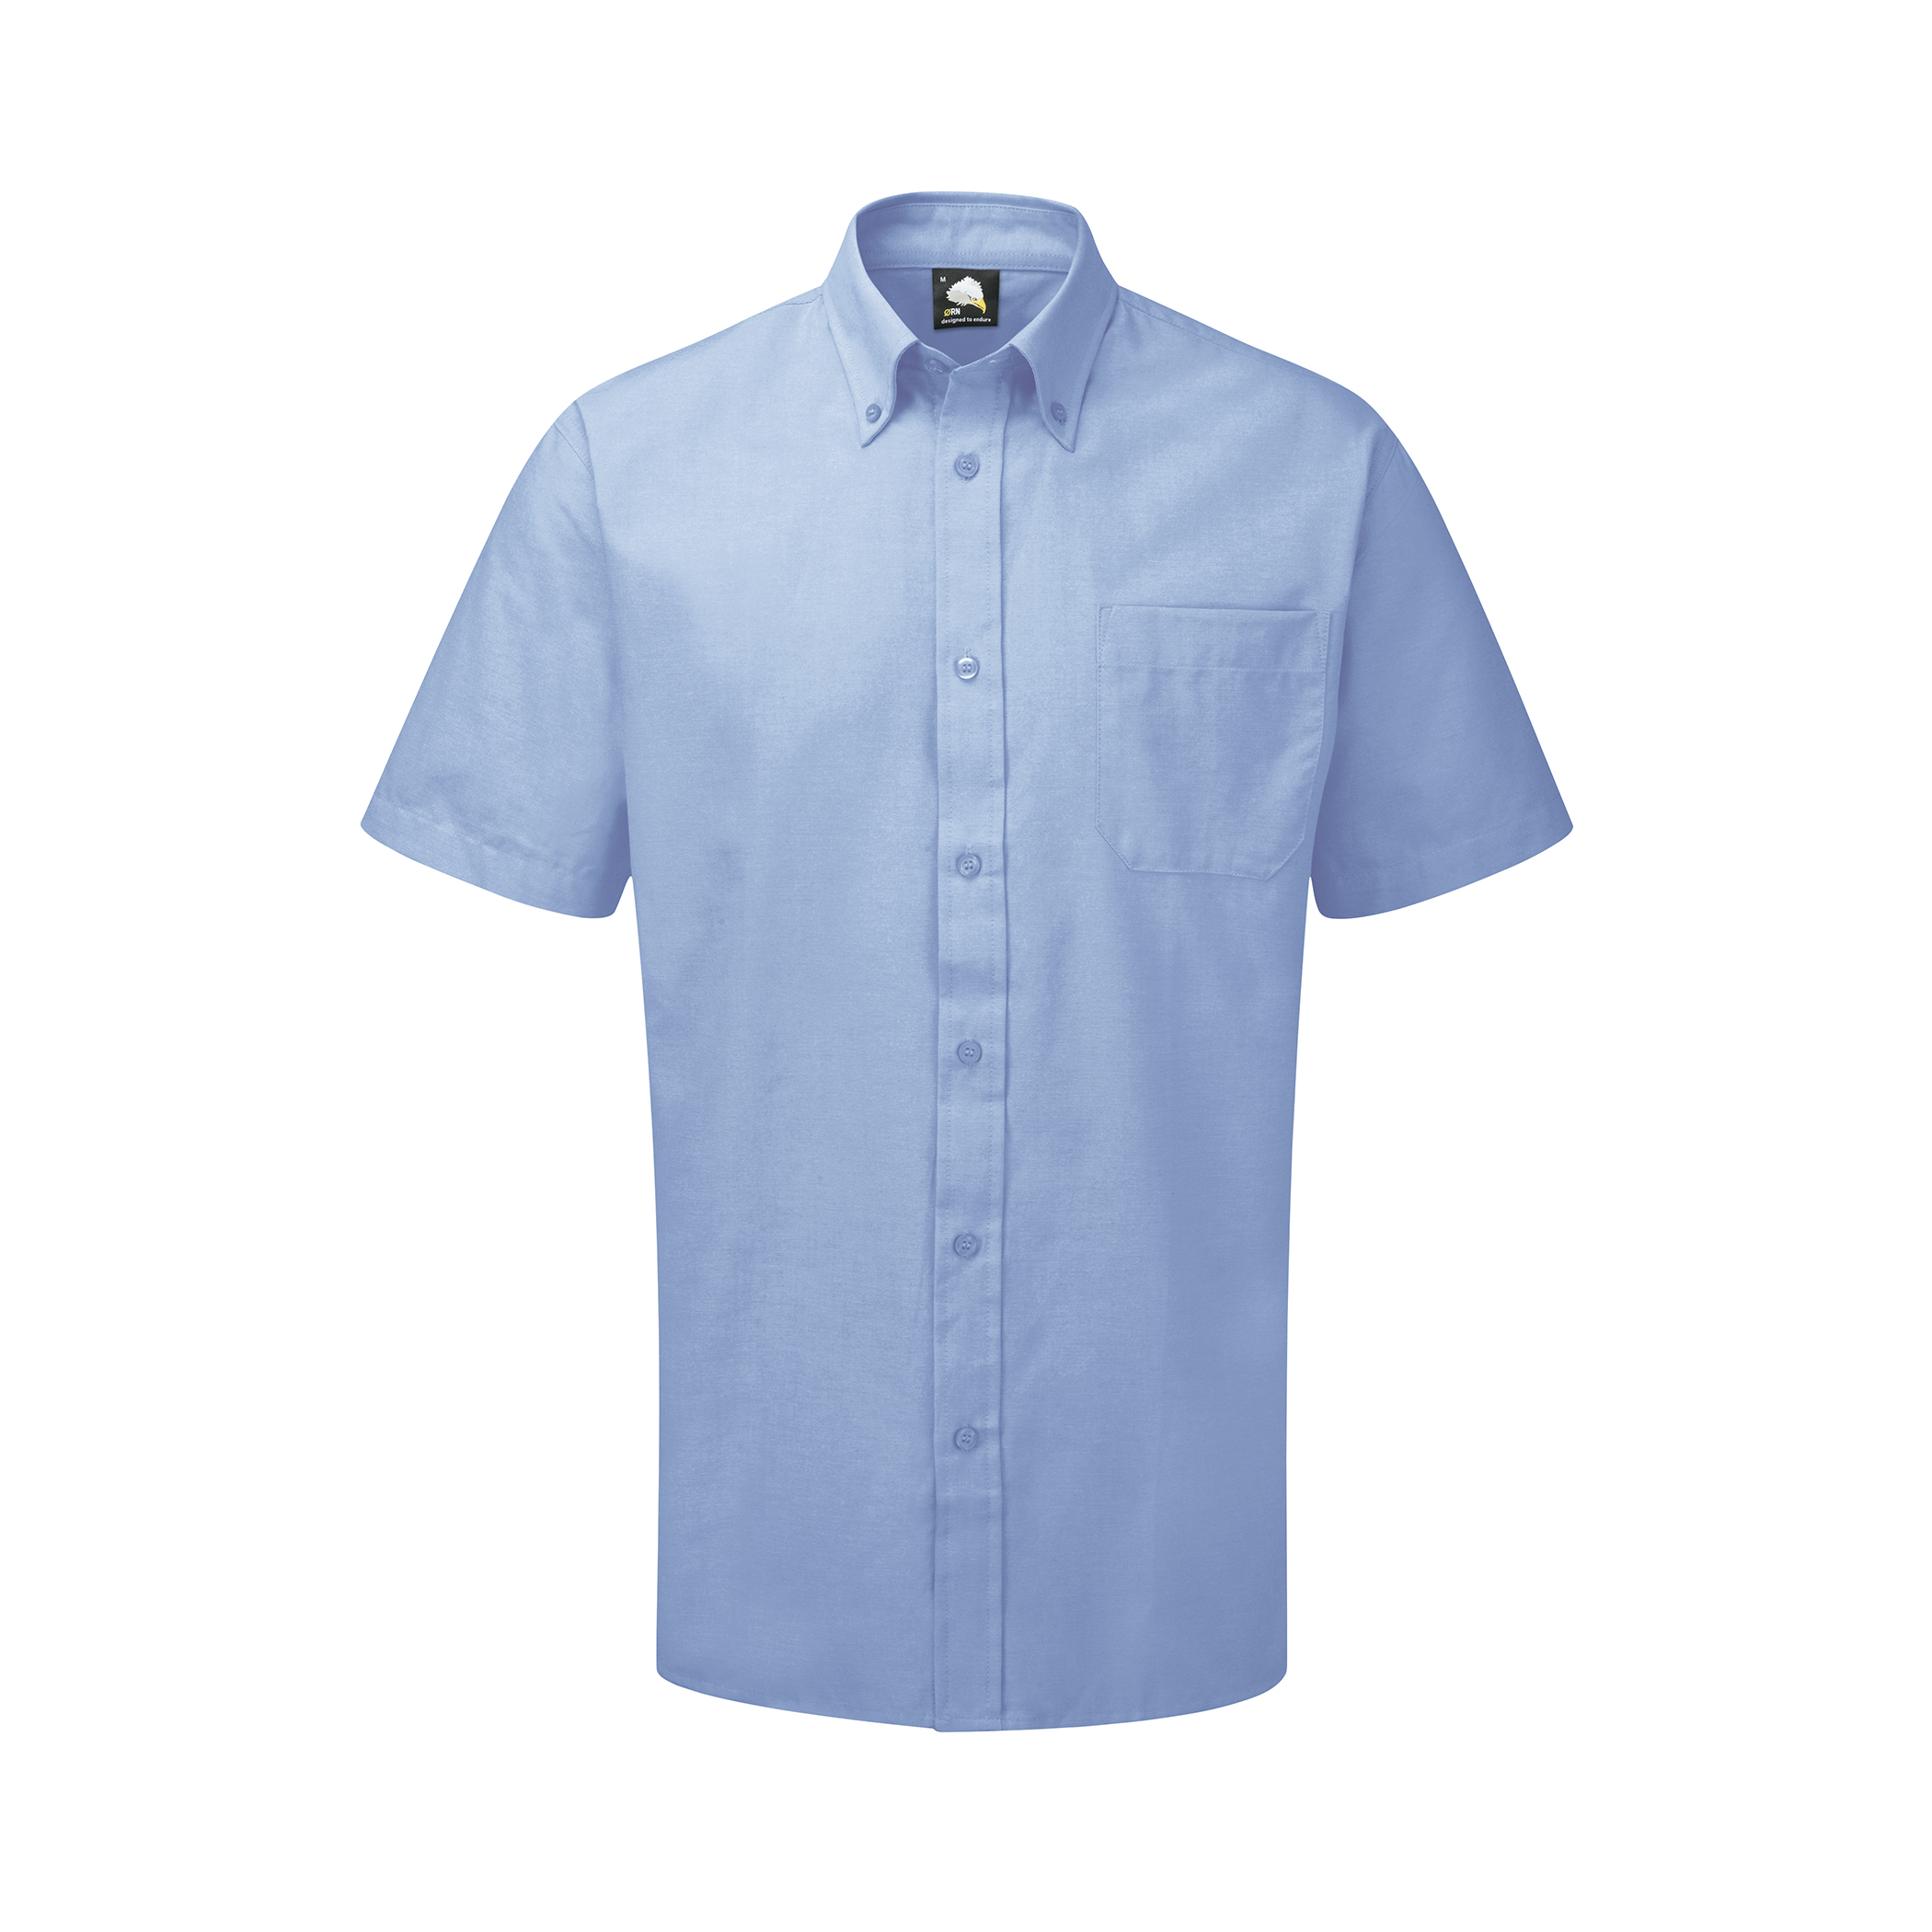 Classic Oxford S/S Shirt - 14.5 - Sky